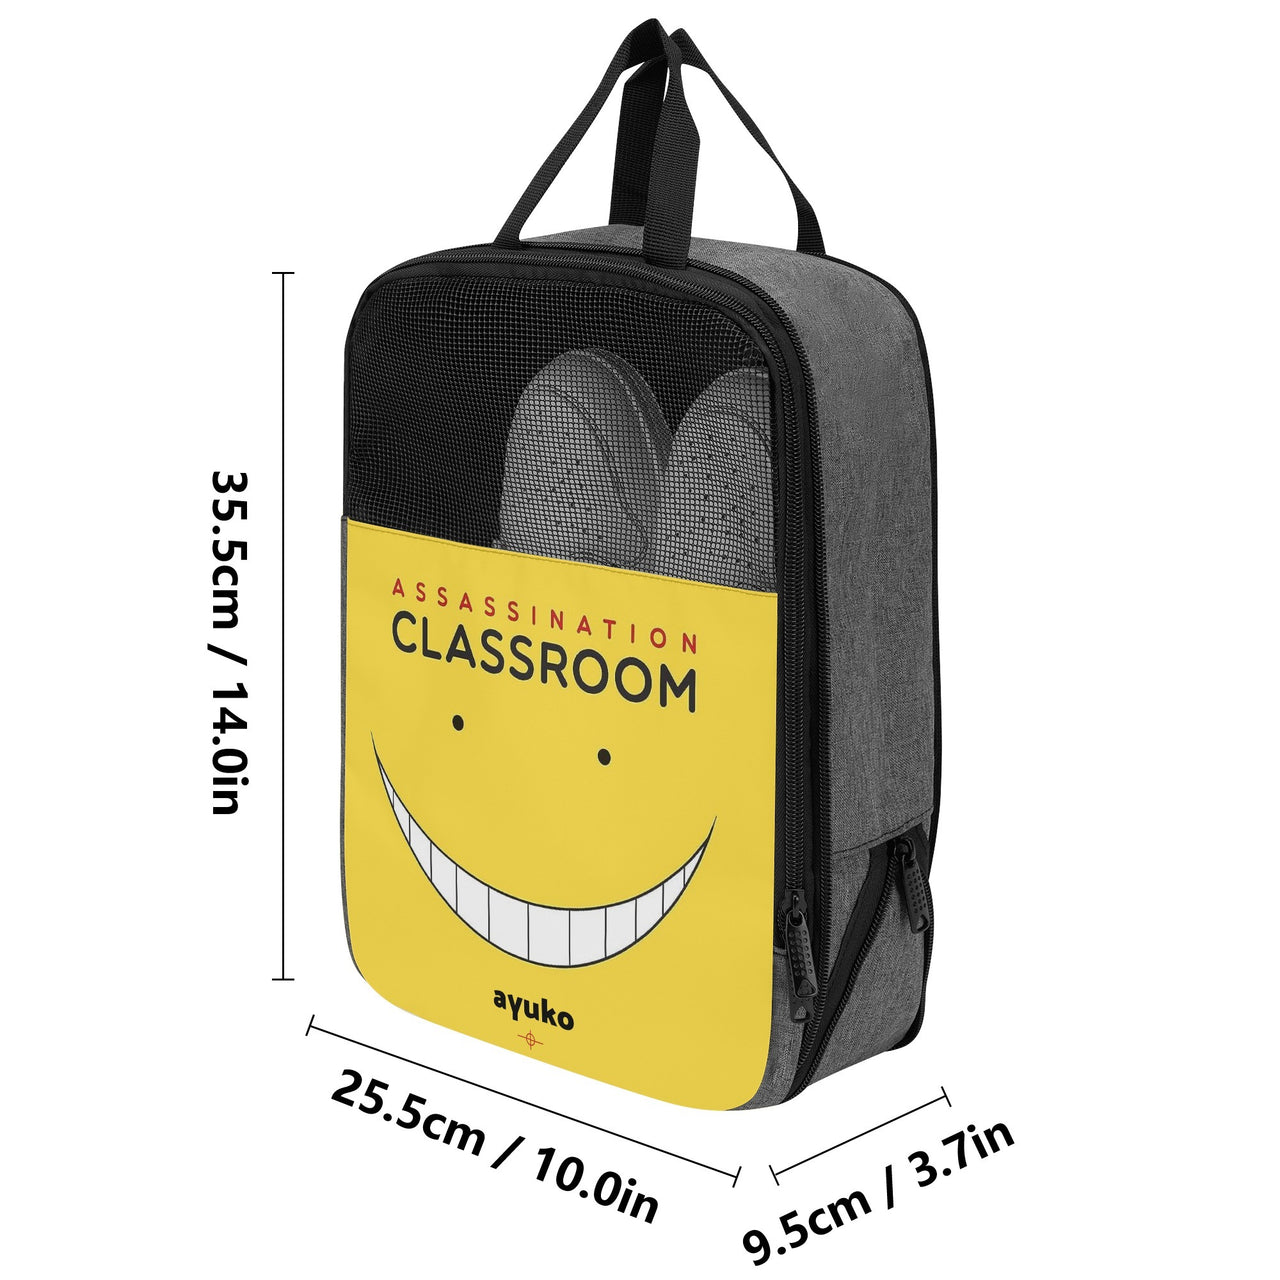 Assassination Classroom Shoe Bag